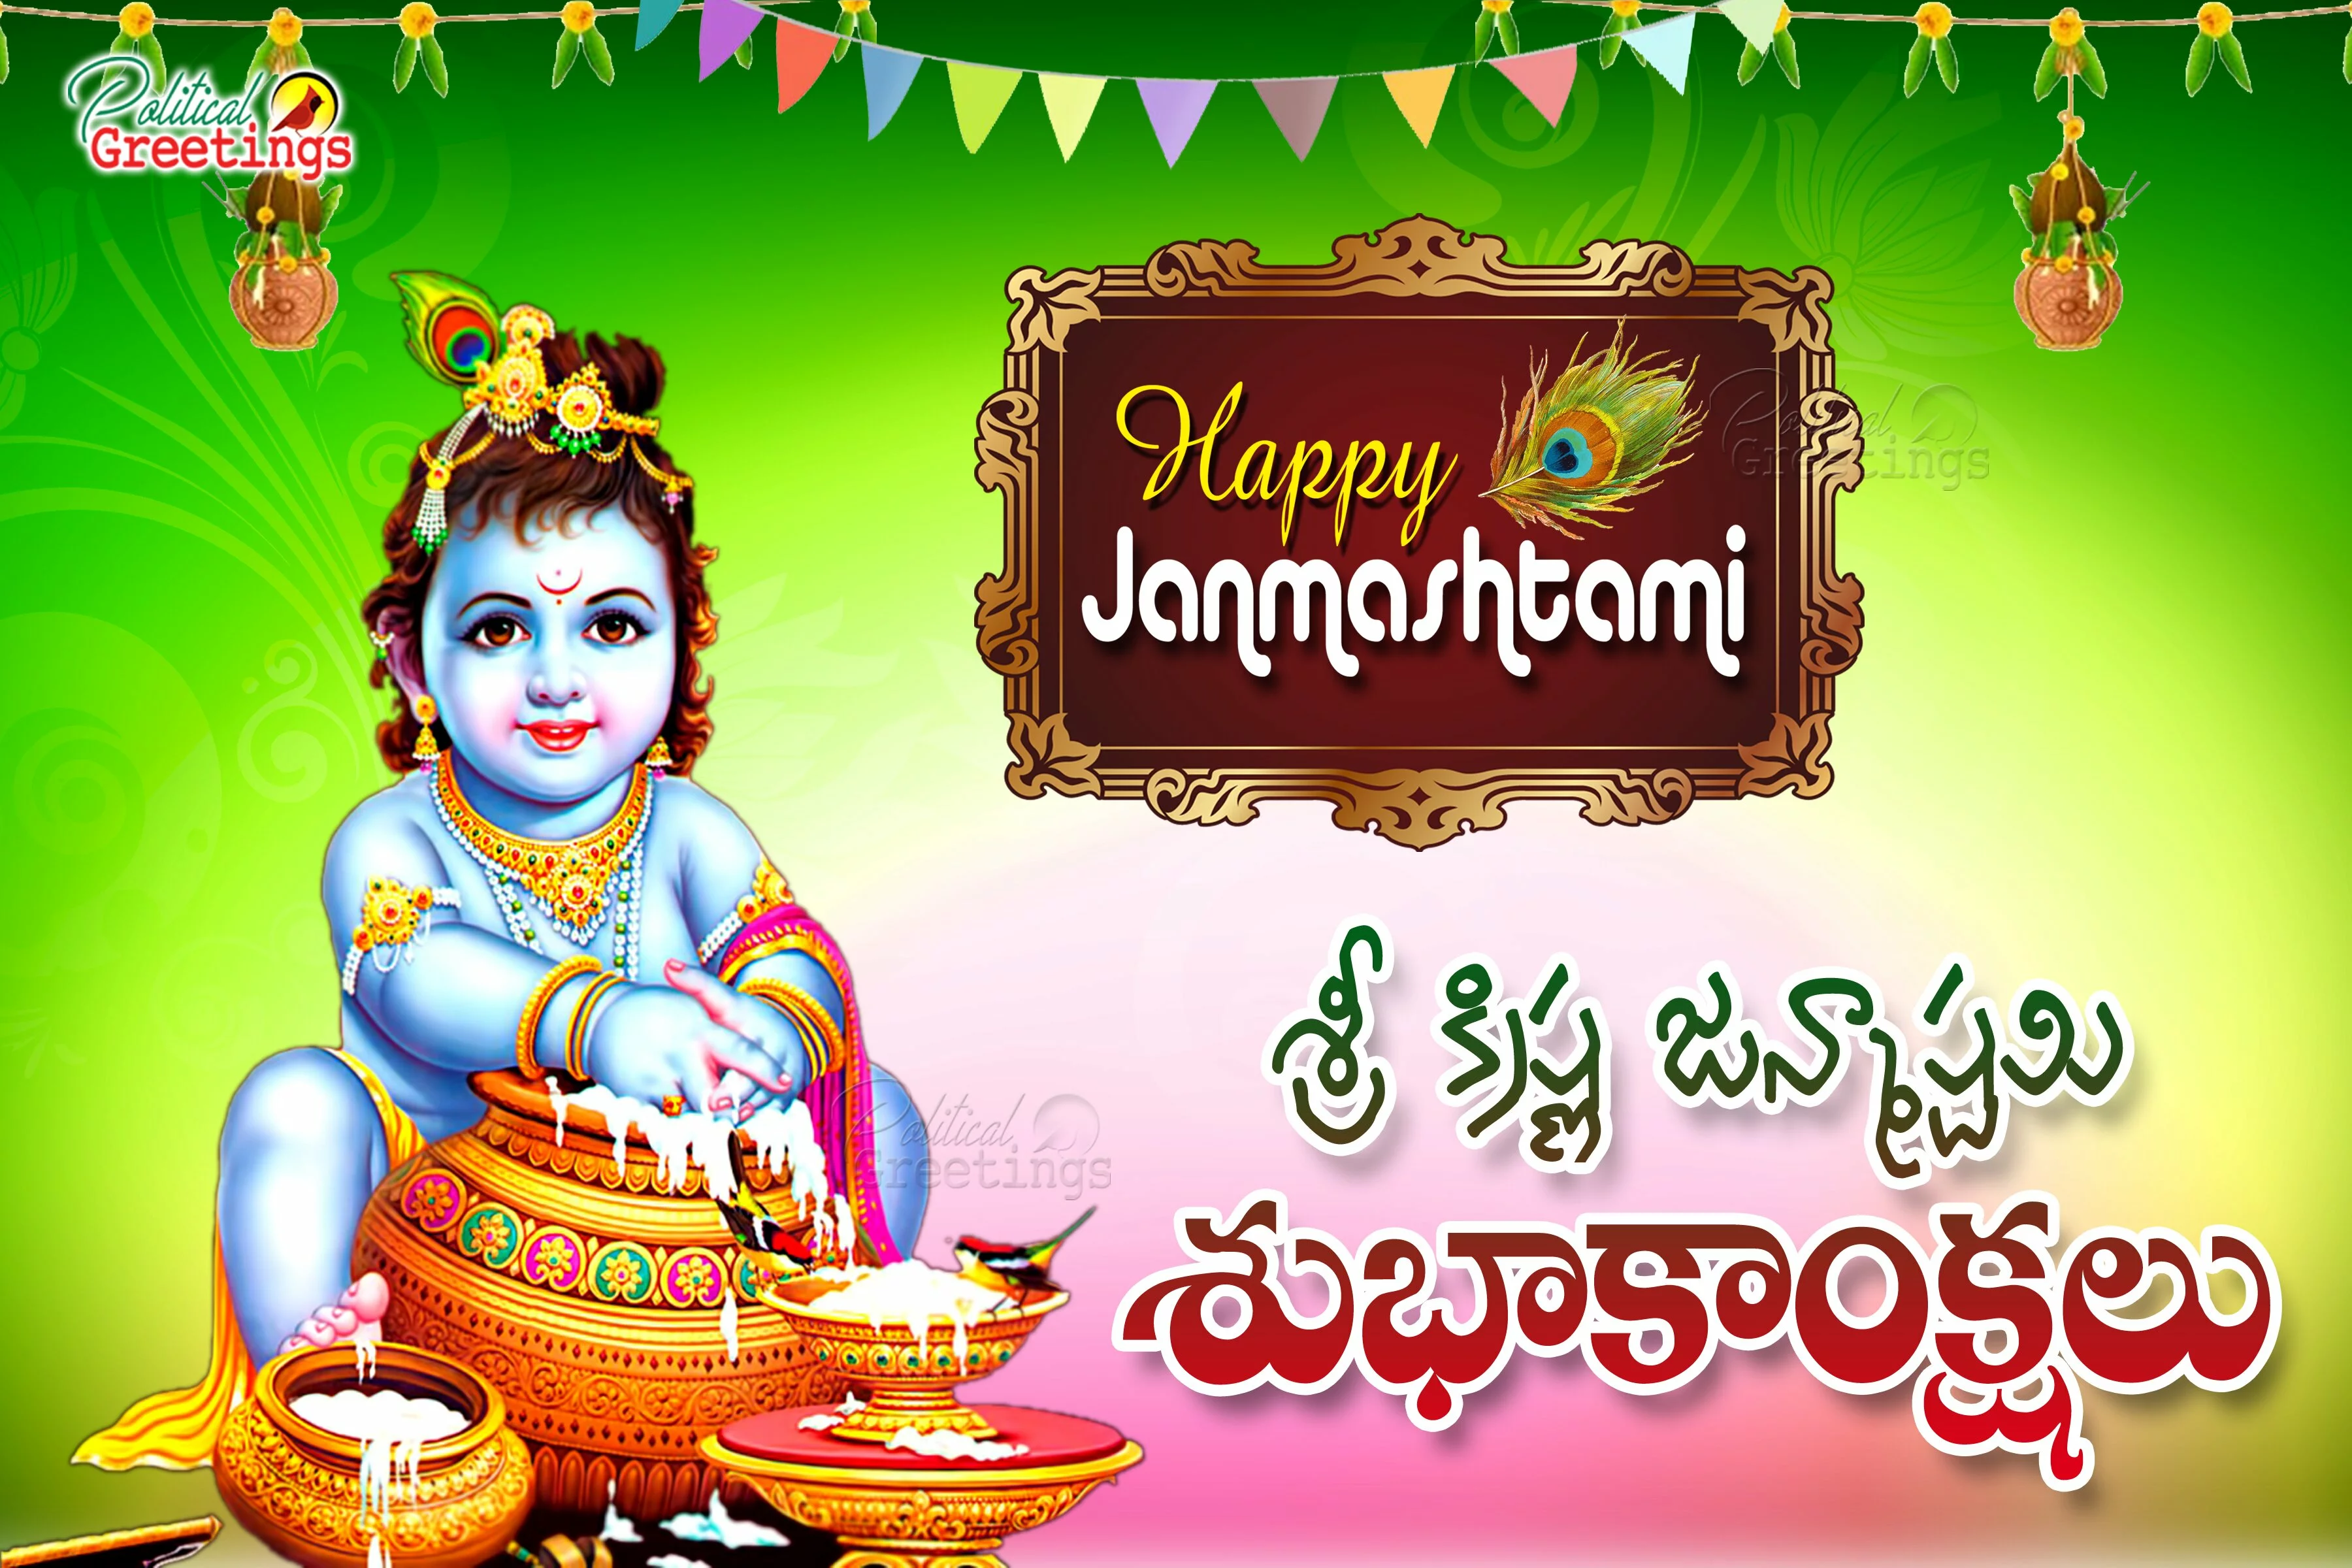 Happy 2017 Advanced Sri Krishnaasthami Greetings With Hd Wallpapers in Telugu